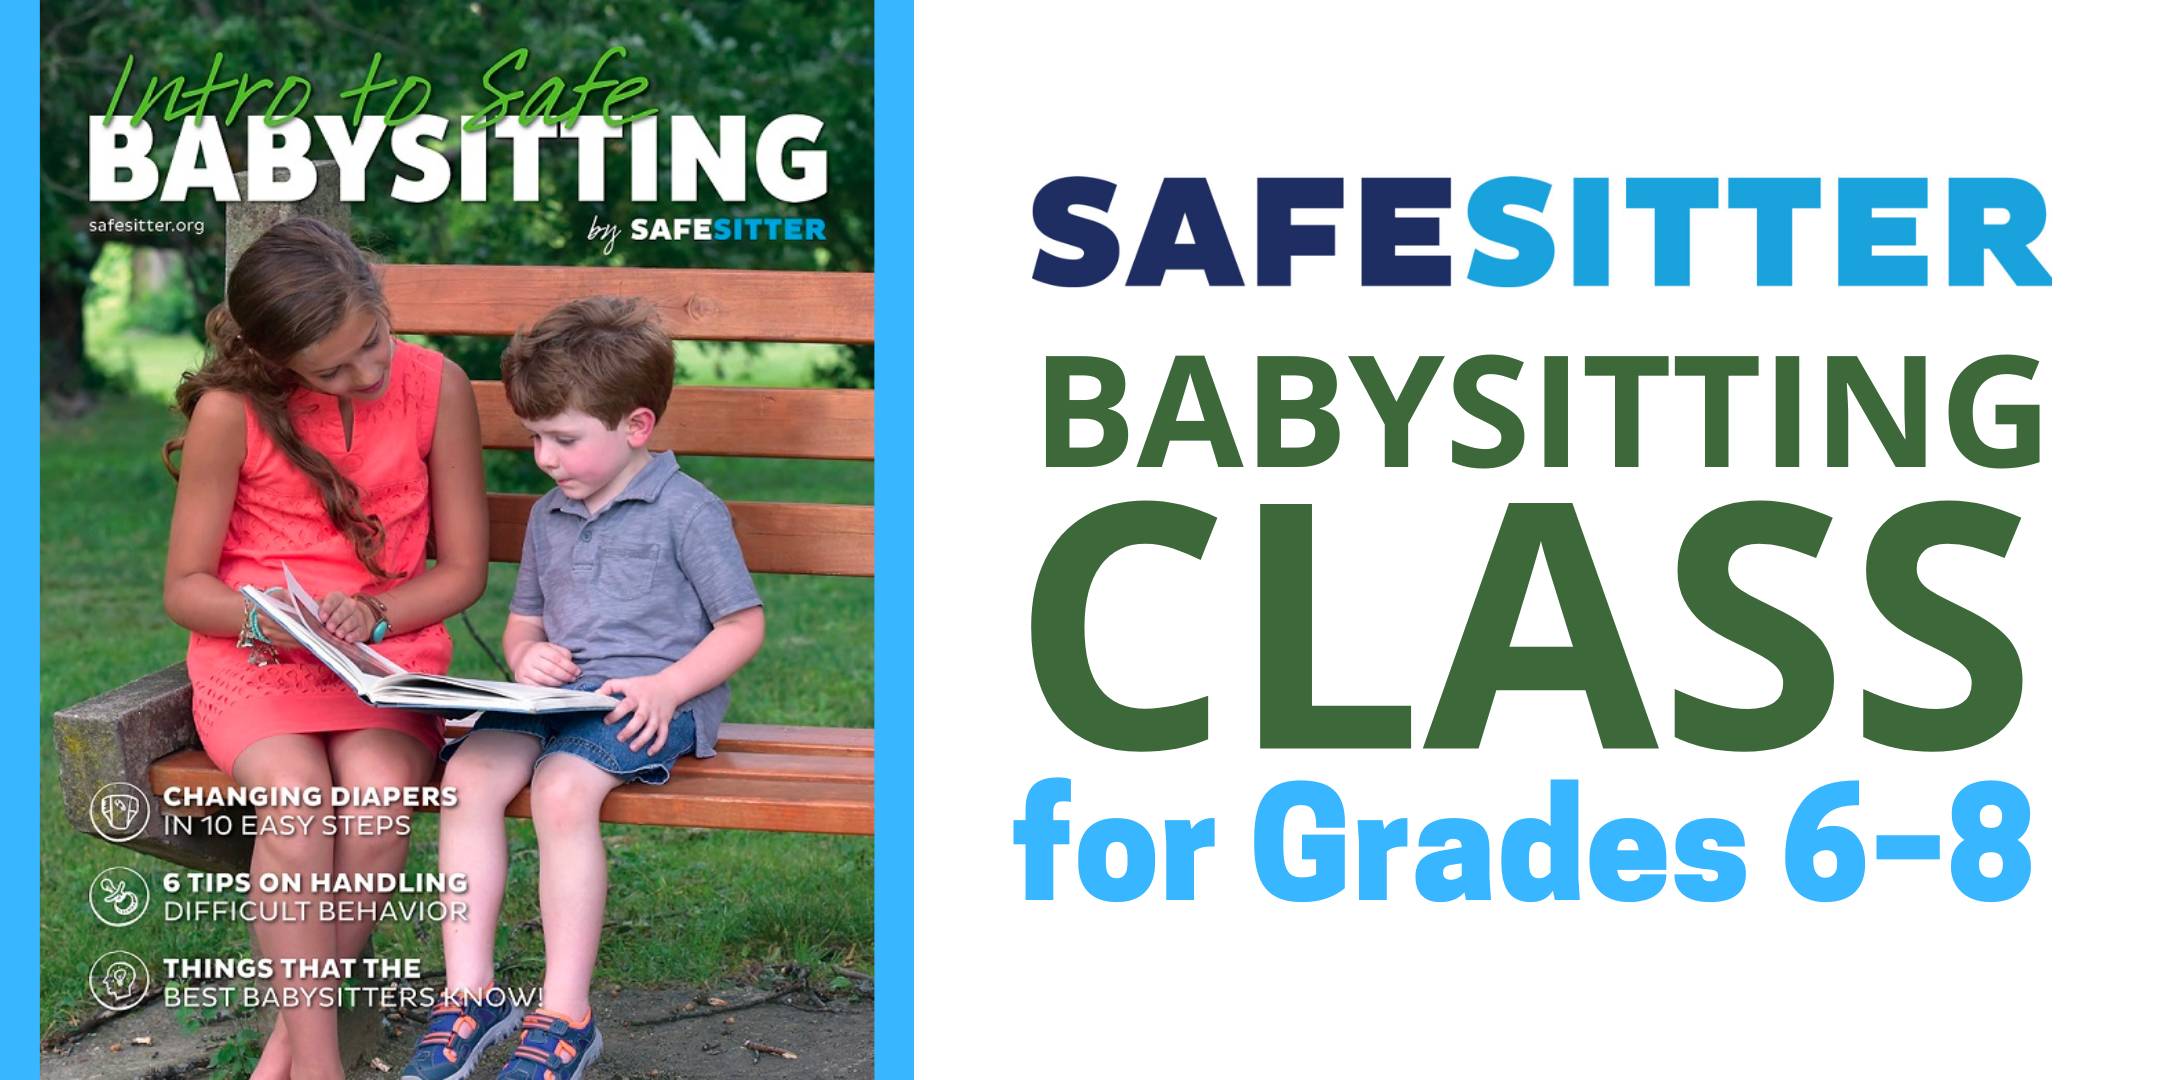 image of "Safesitter Babysitting Class for Grades 6-8"